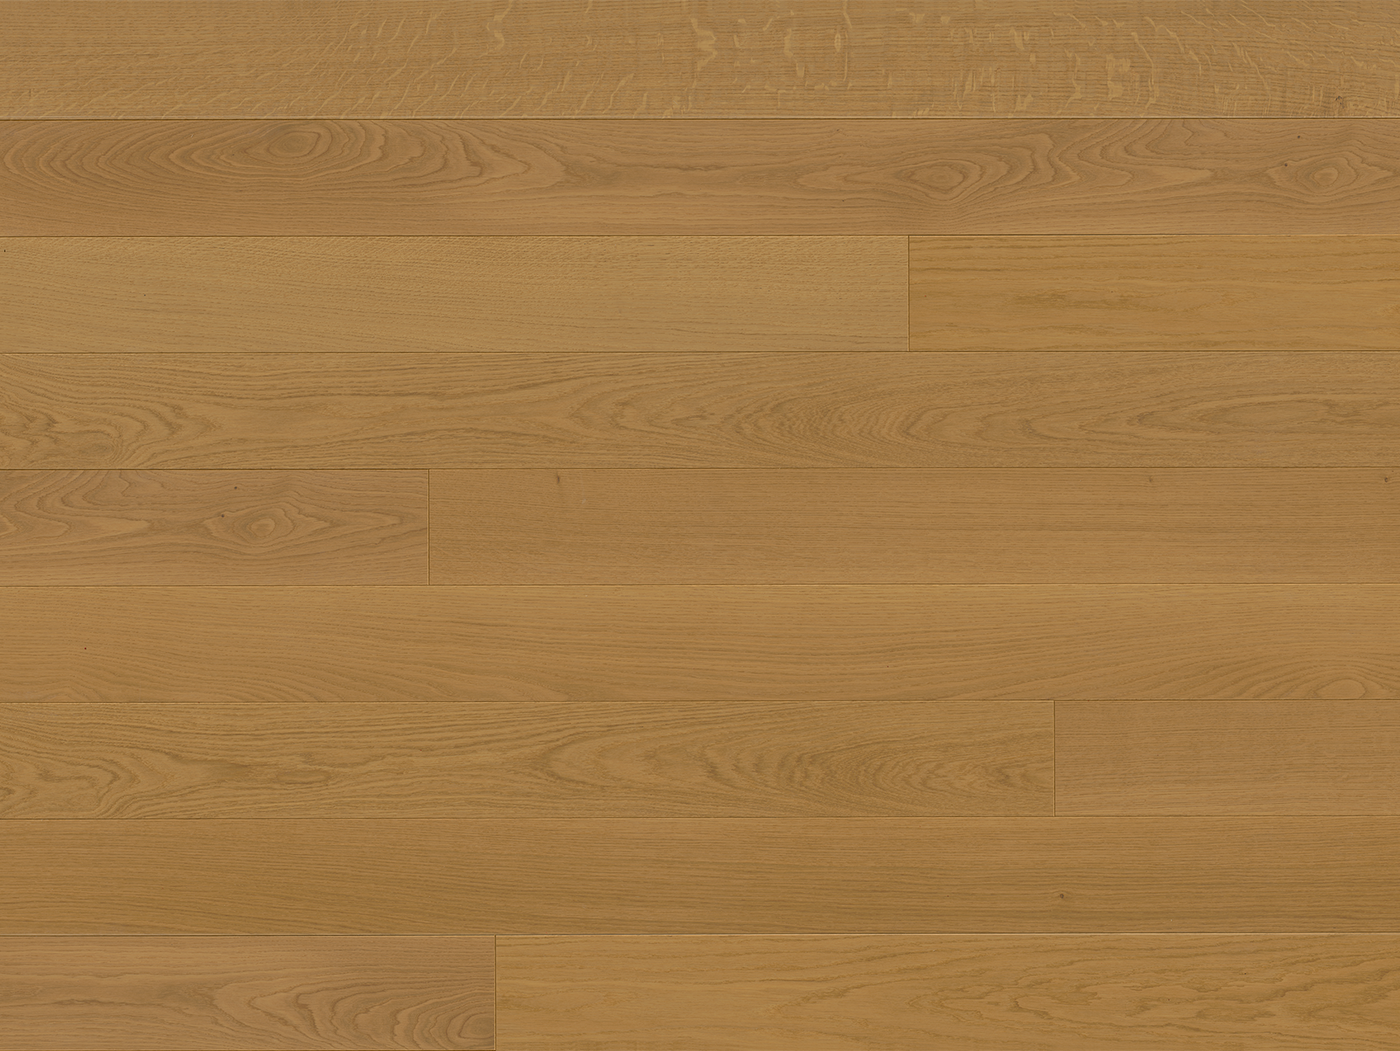 Reward Flooring Europa 5.5" x RL Hardwood Plank